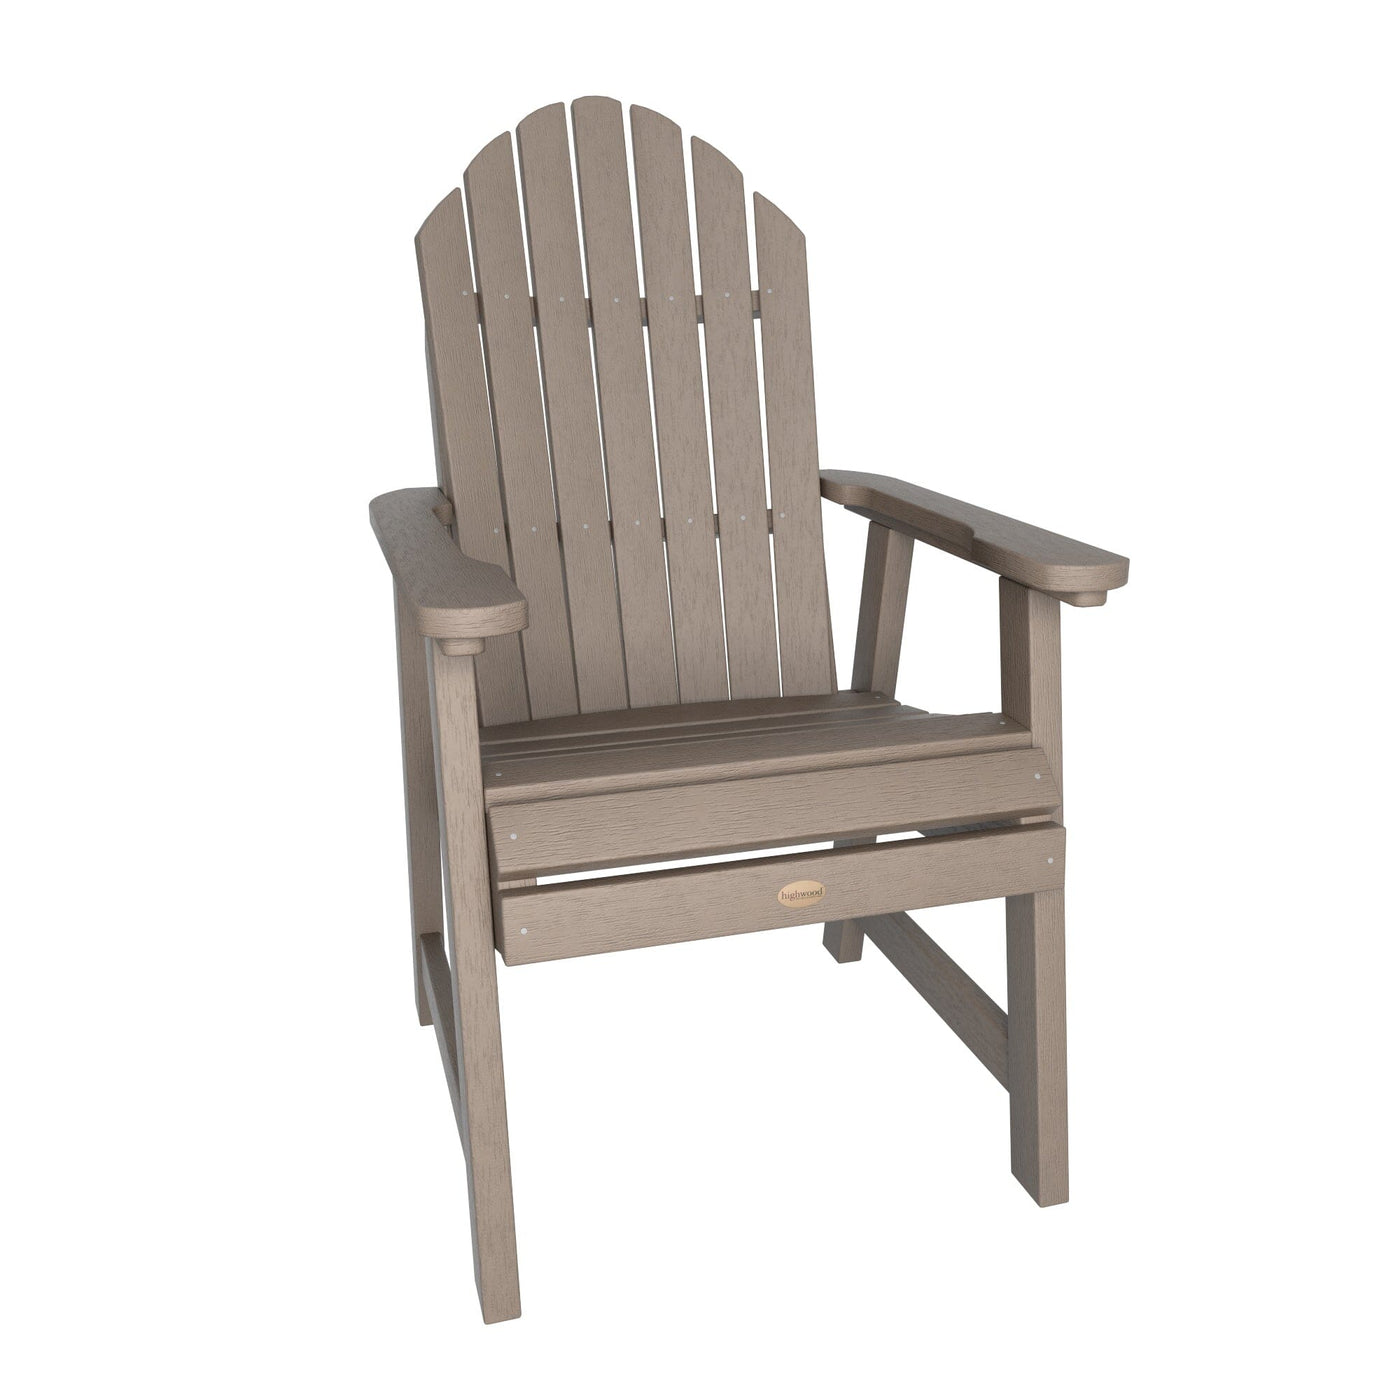 Refurbished Hamilton Deck Chair Adirondack Chairs Highwood USA Woodland Brown 